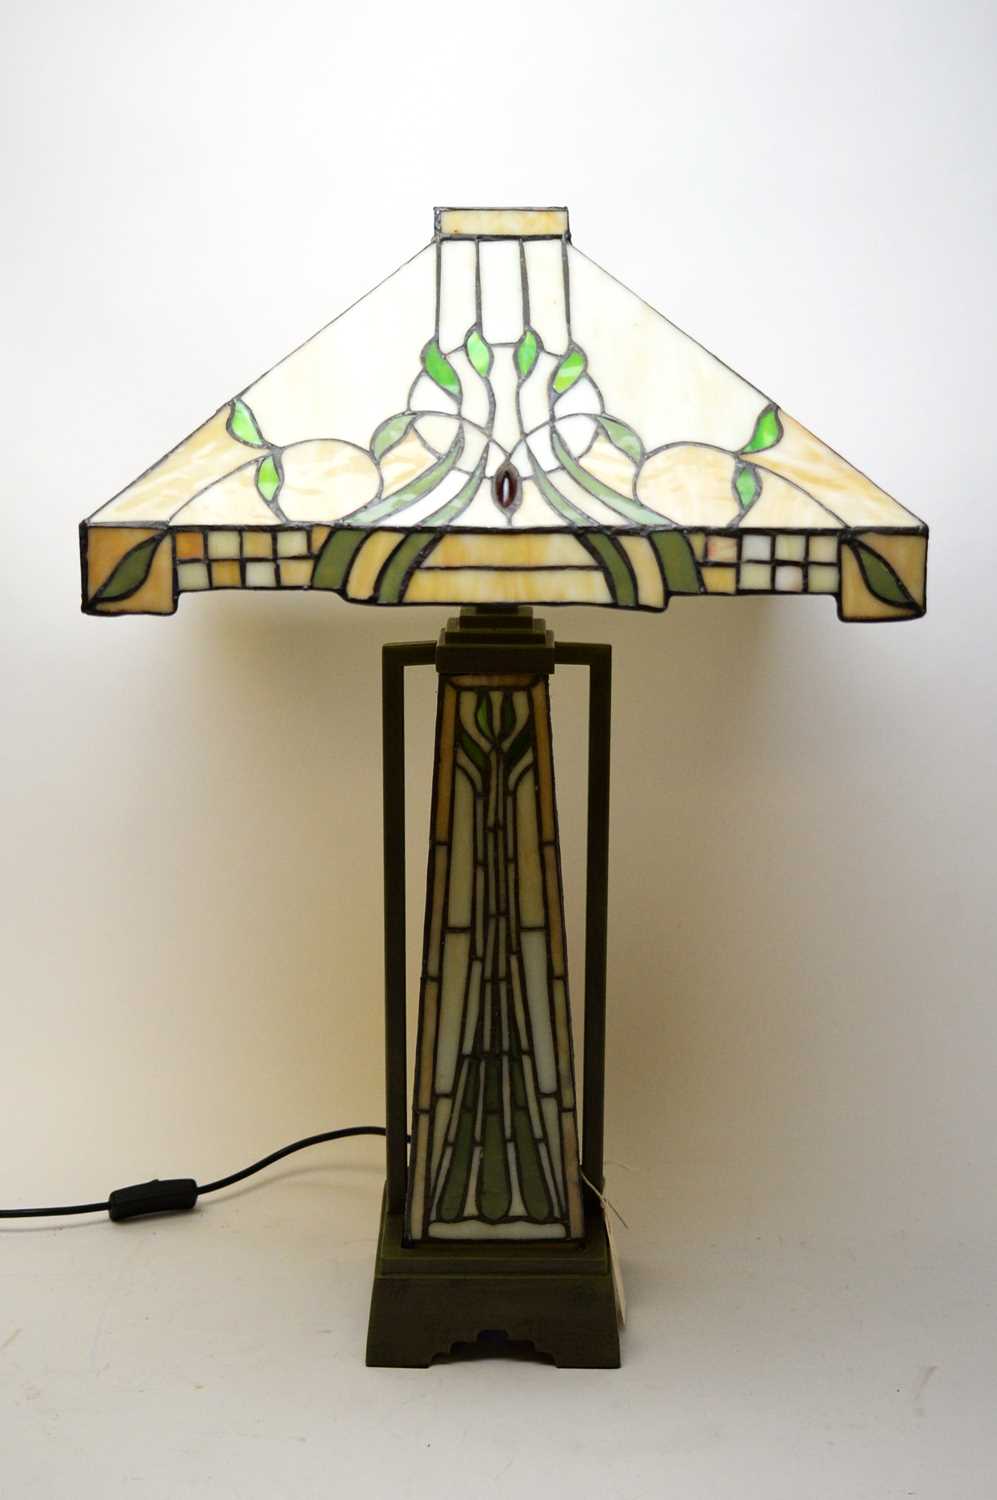 Lot 429 - Tiffany-style lamp and shade.